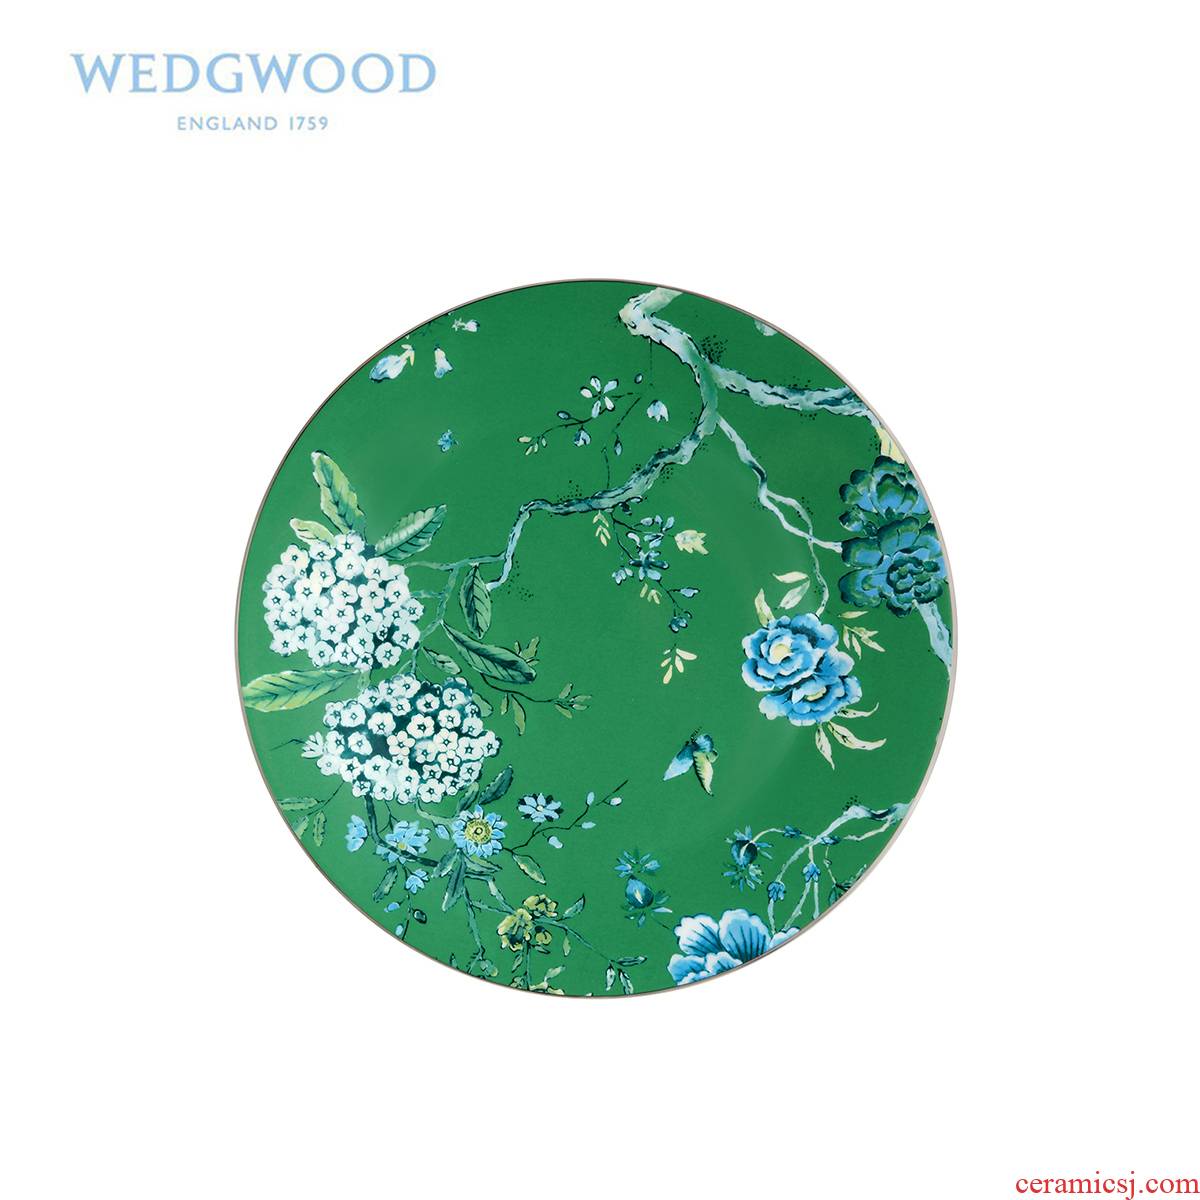 Wedgwood waterford Wedgwood Jasper conran Chinese wind green 27 cm ipads porcelain green disc/decorative plate